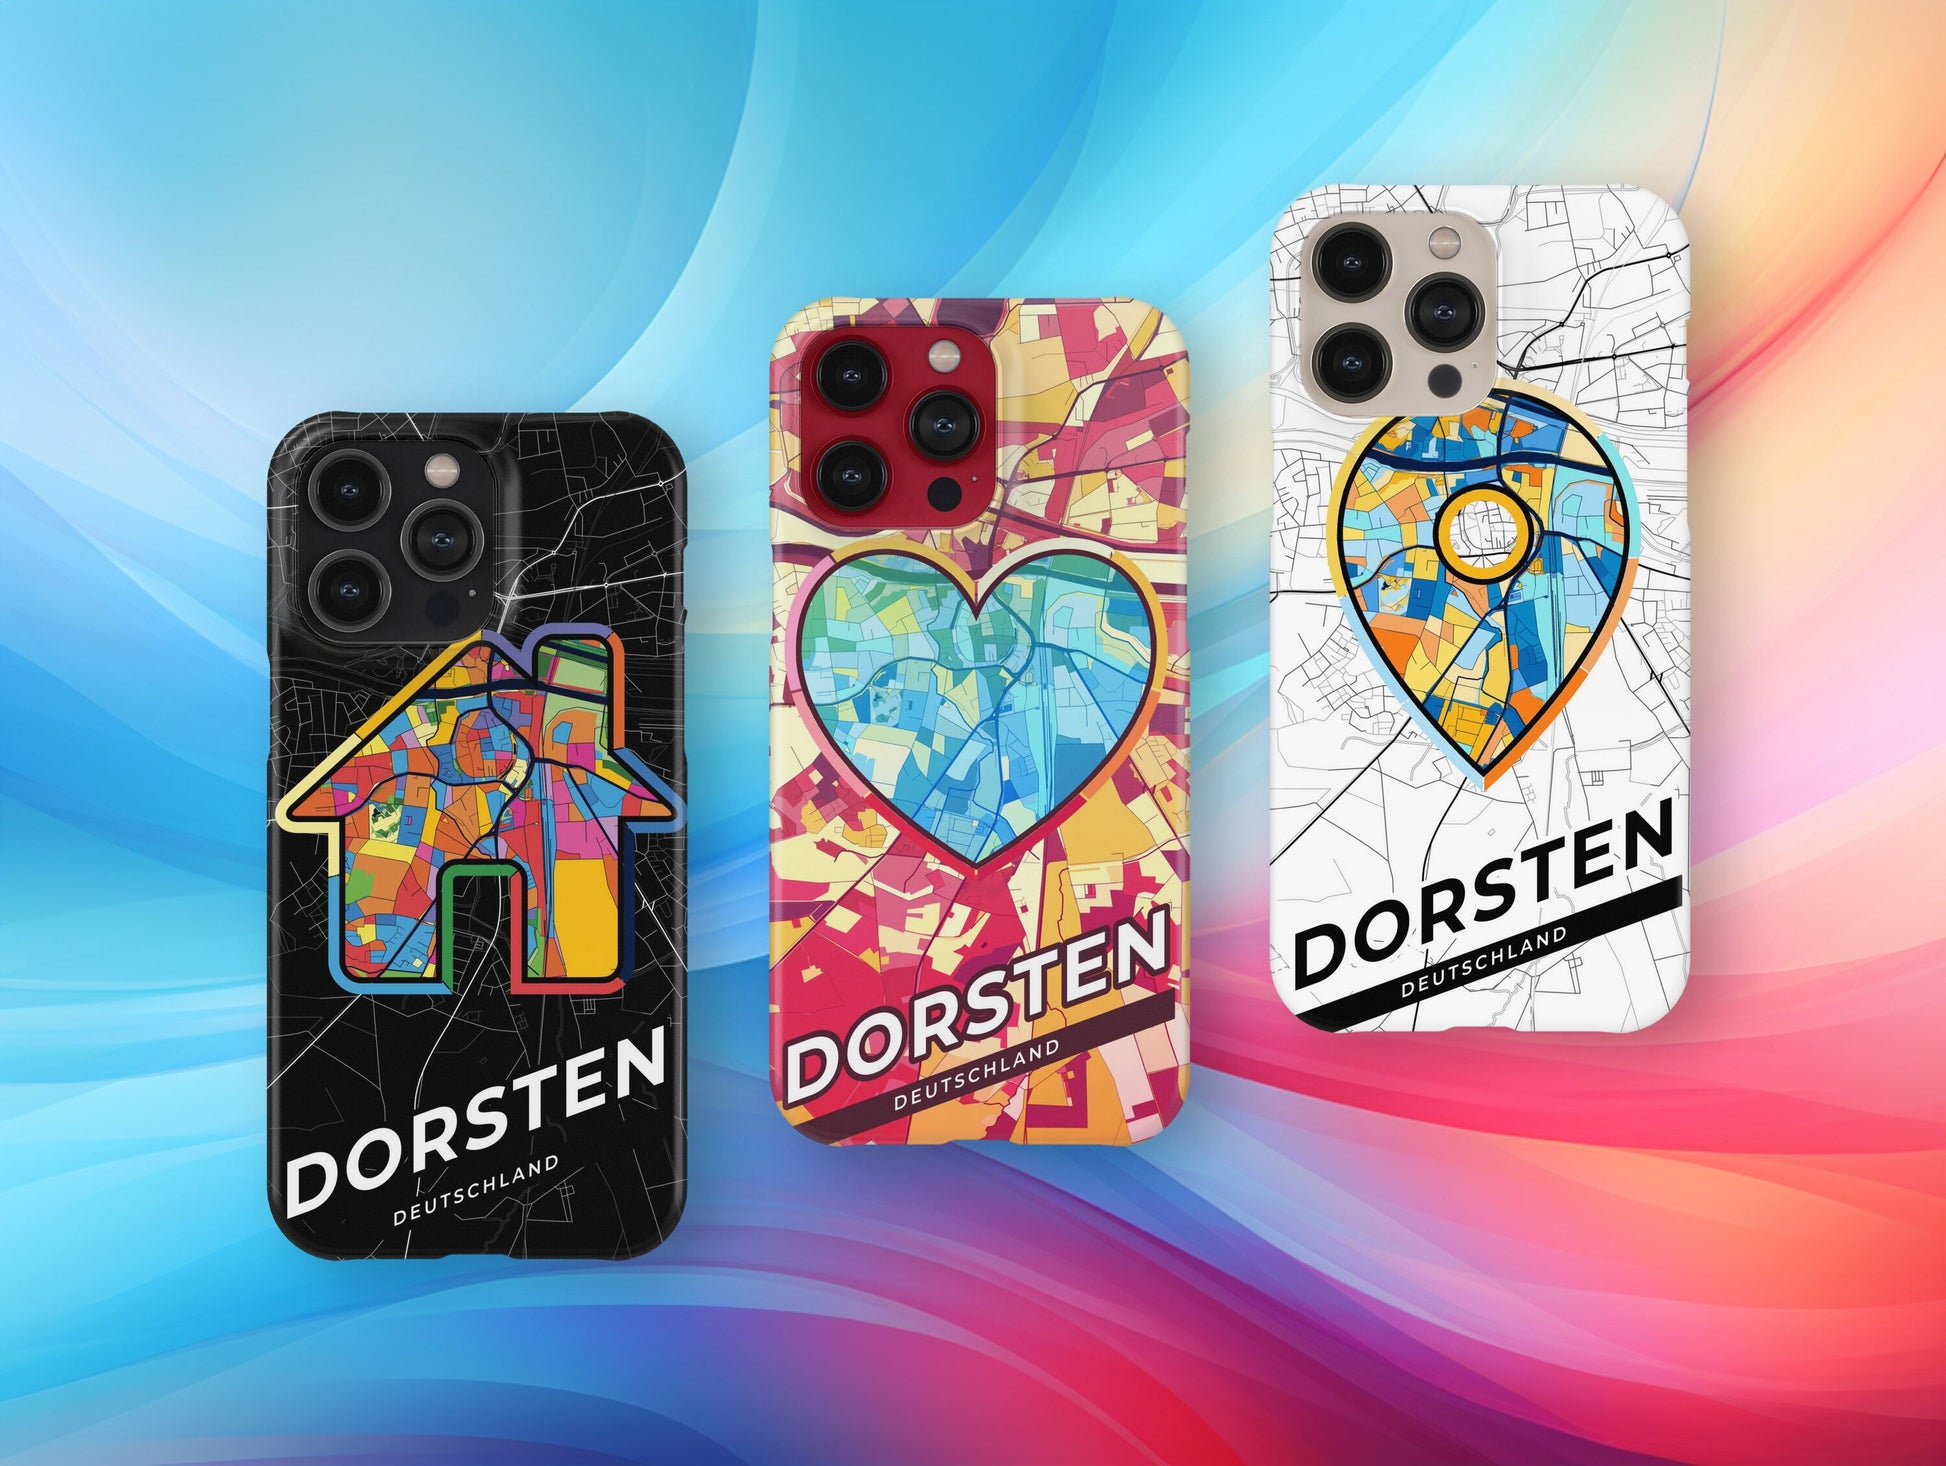 Dorsten Deutschland slim phone case with colorful icon. Birthday, wedding or housewarming gift. Couple match cases.